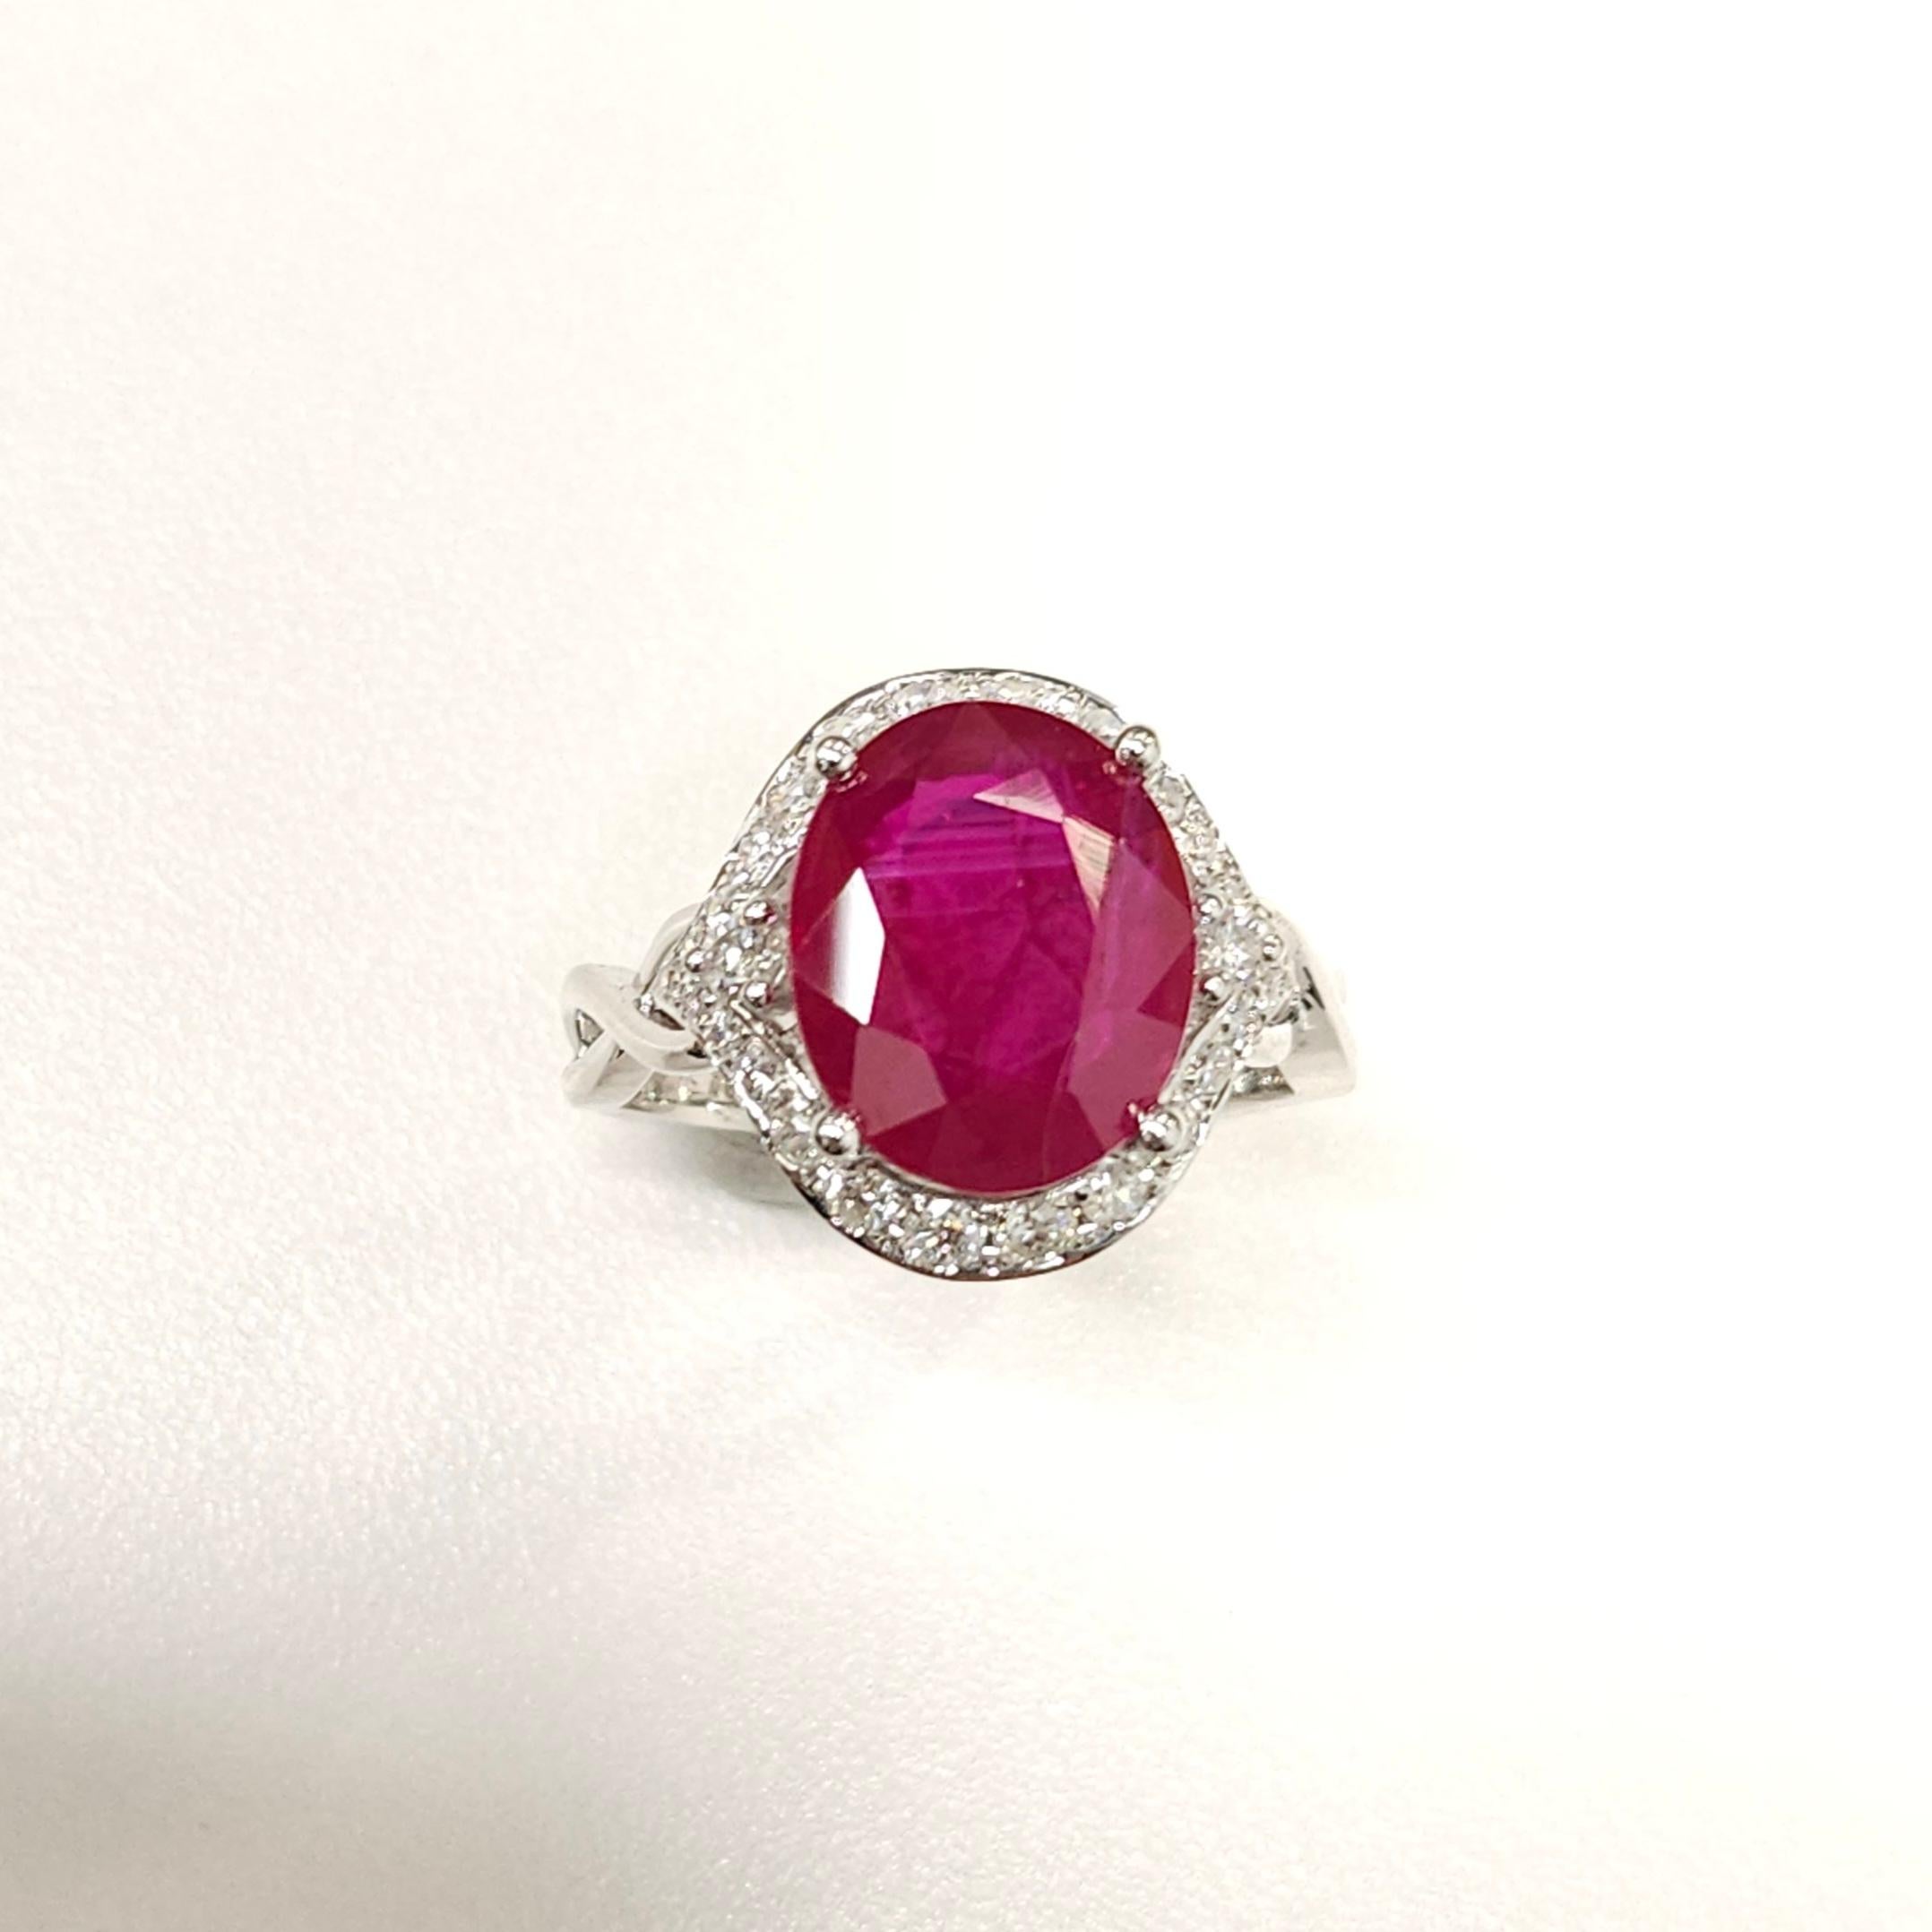 IGI Certified 4.59 Carat Burma Ruby & Diamond Ring in 18K White Gold For Sale 2